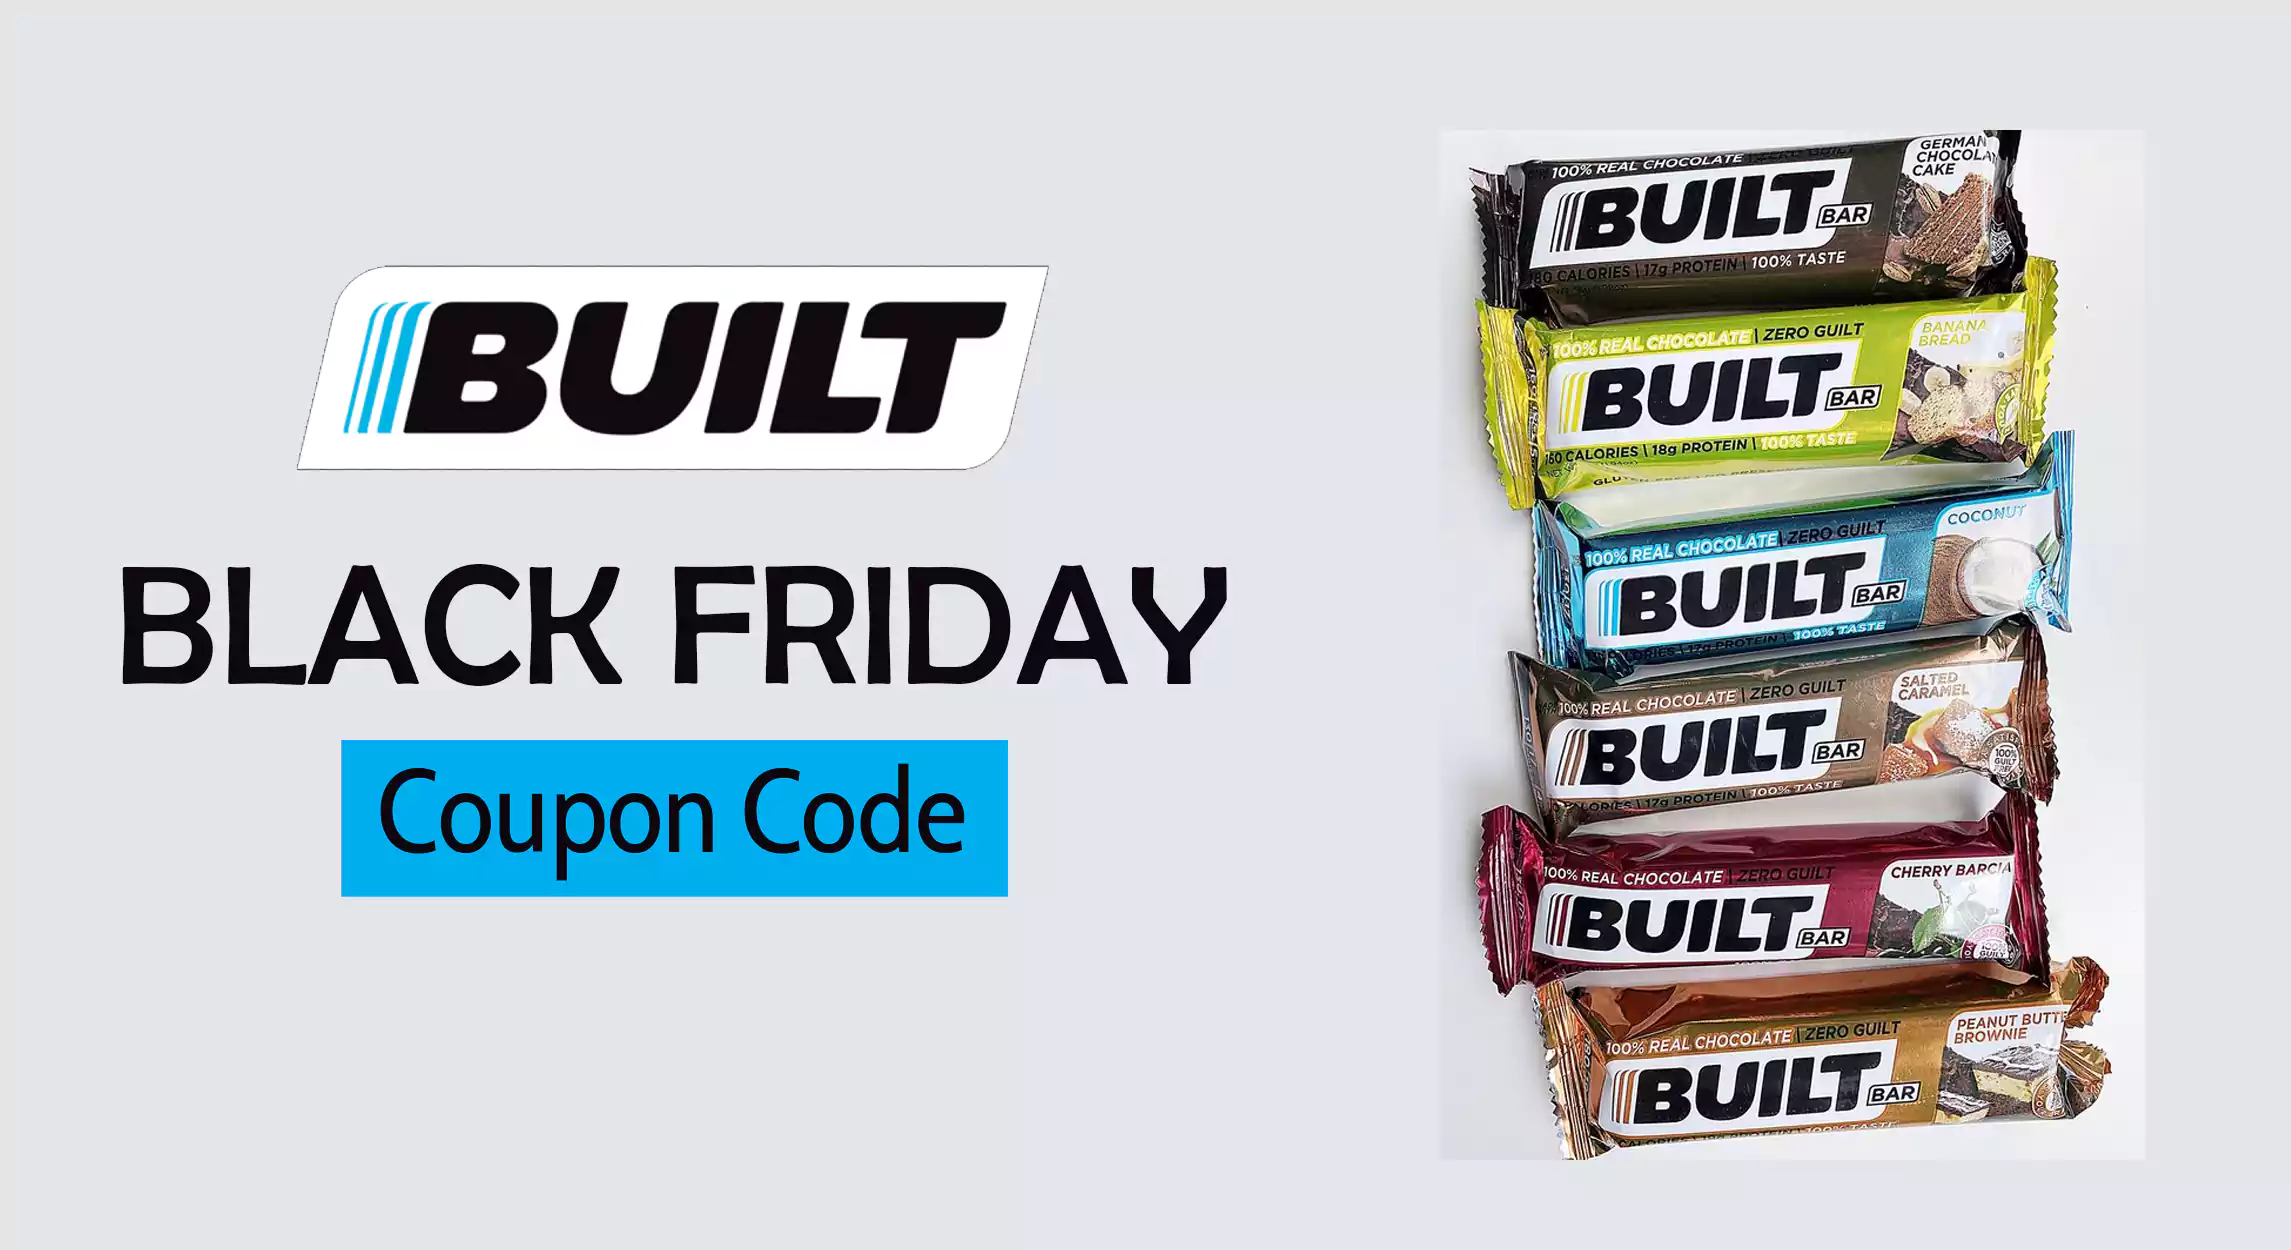 Built Bar Black Friday Coupon Code